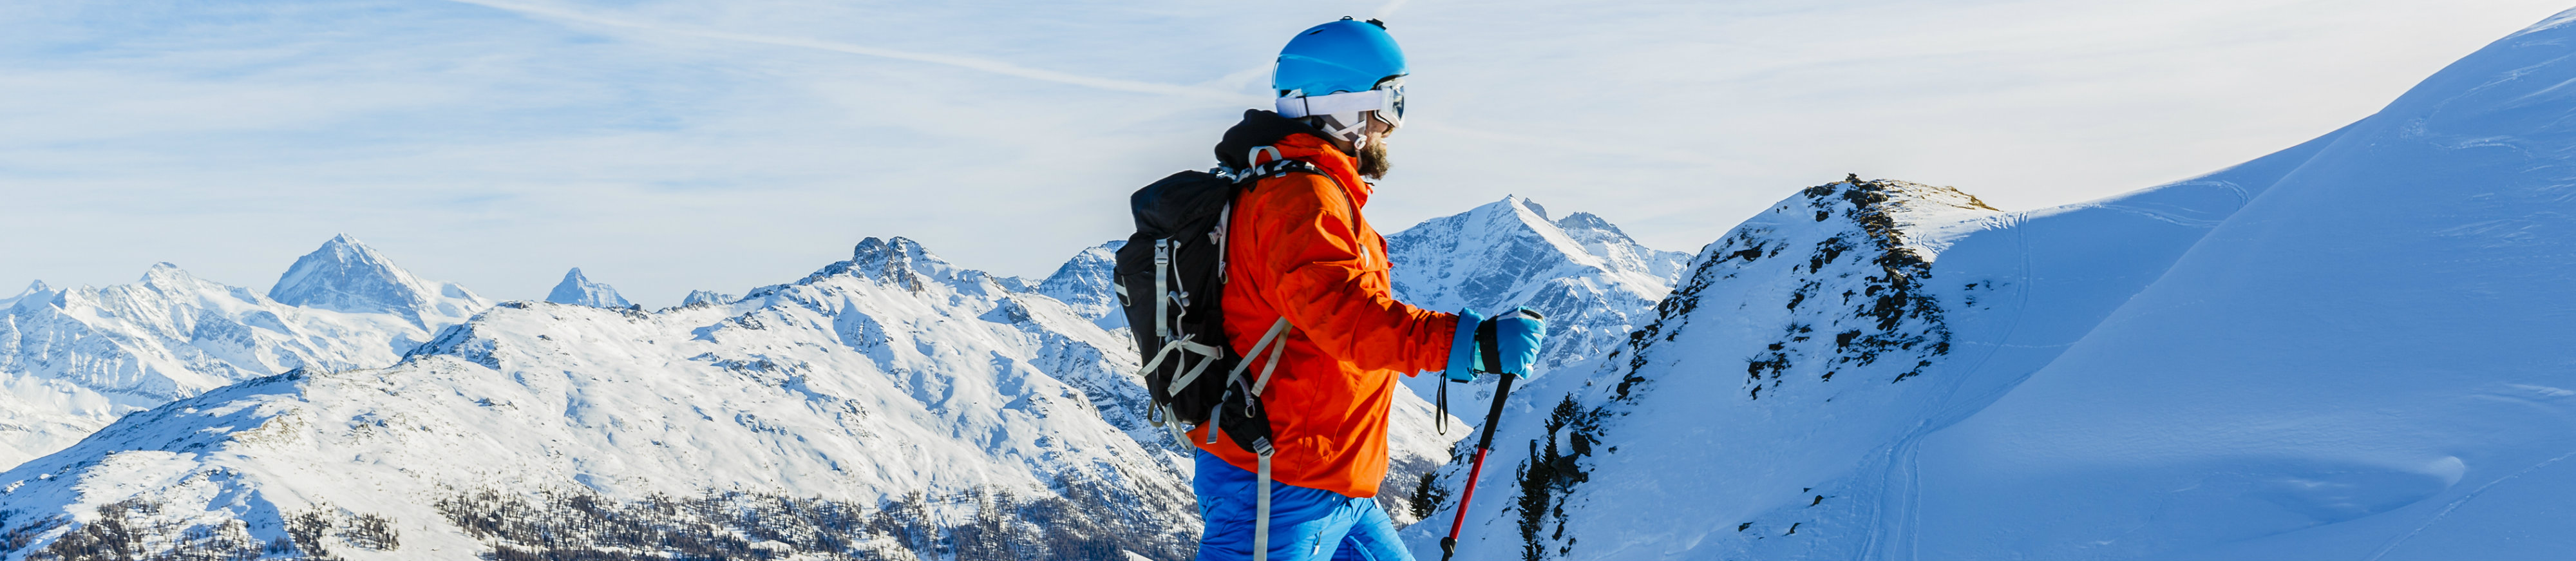 bigstock-ski-touring-in-high-mountains-146207300